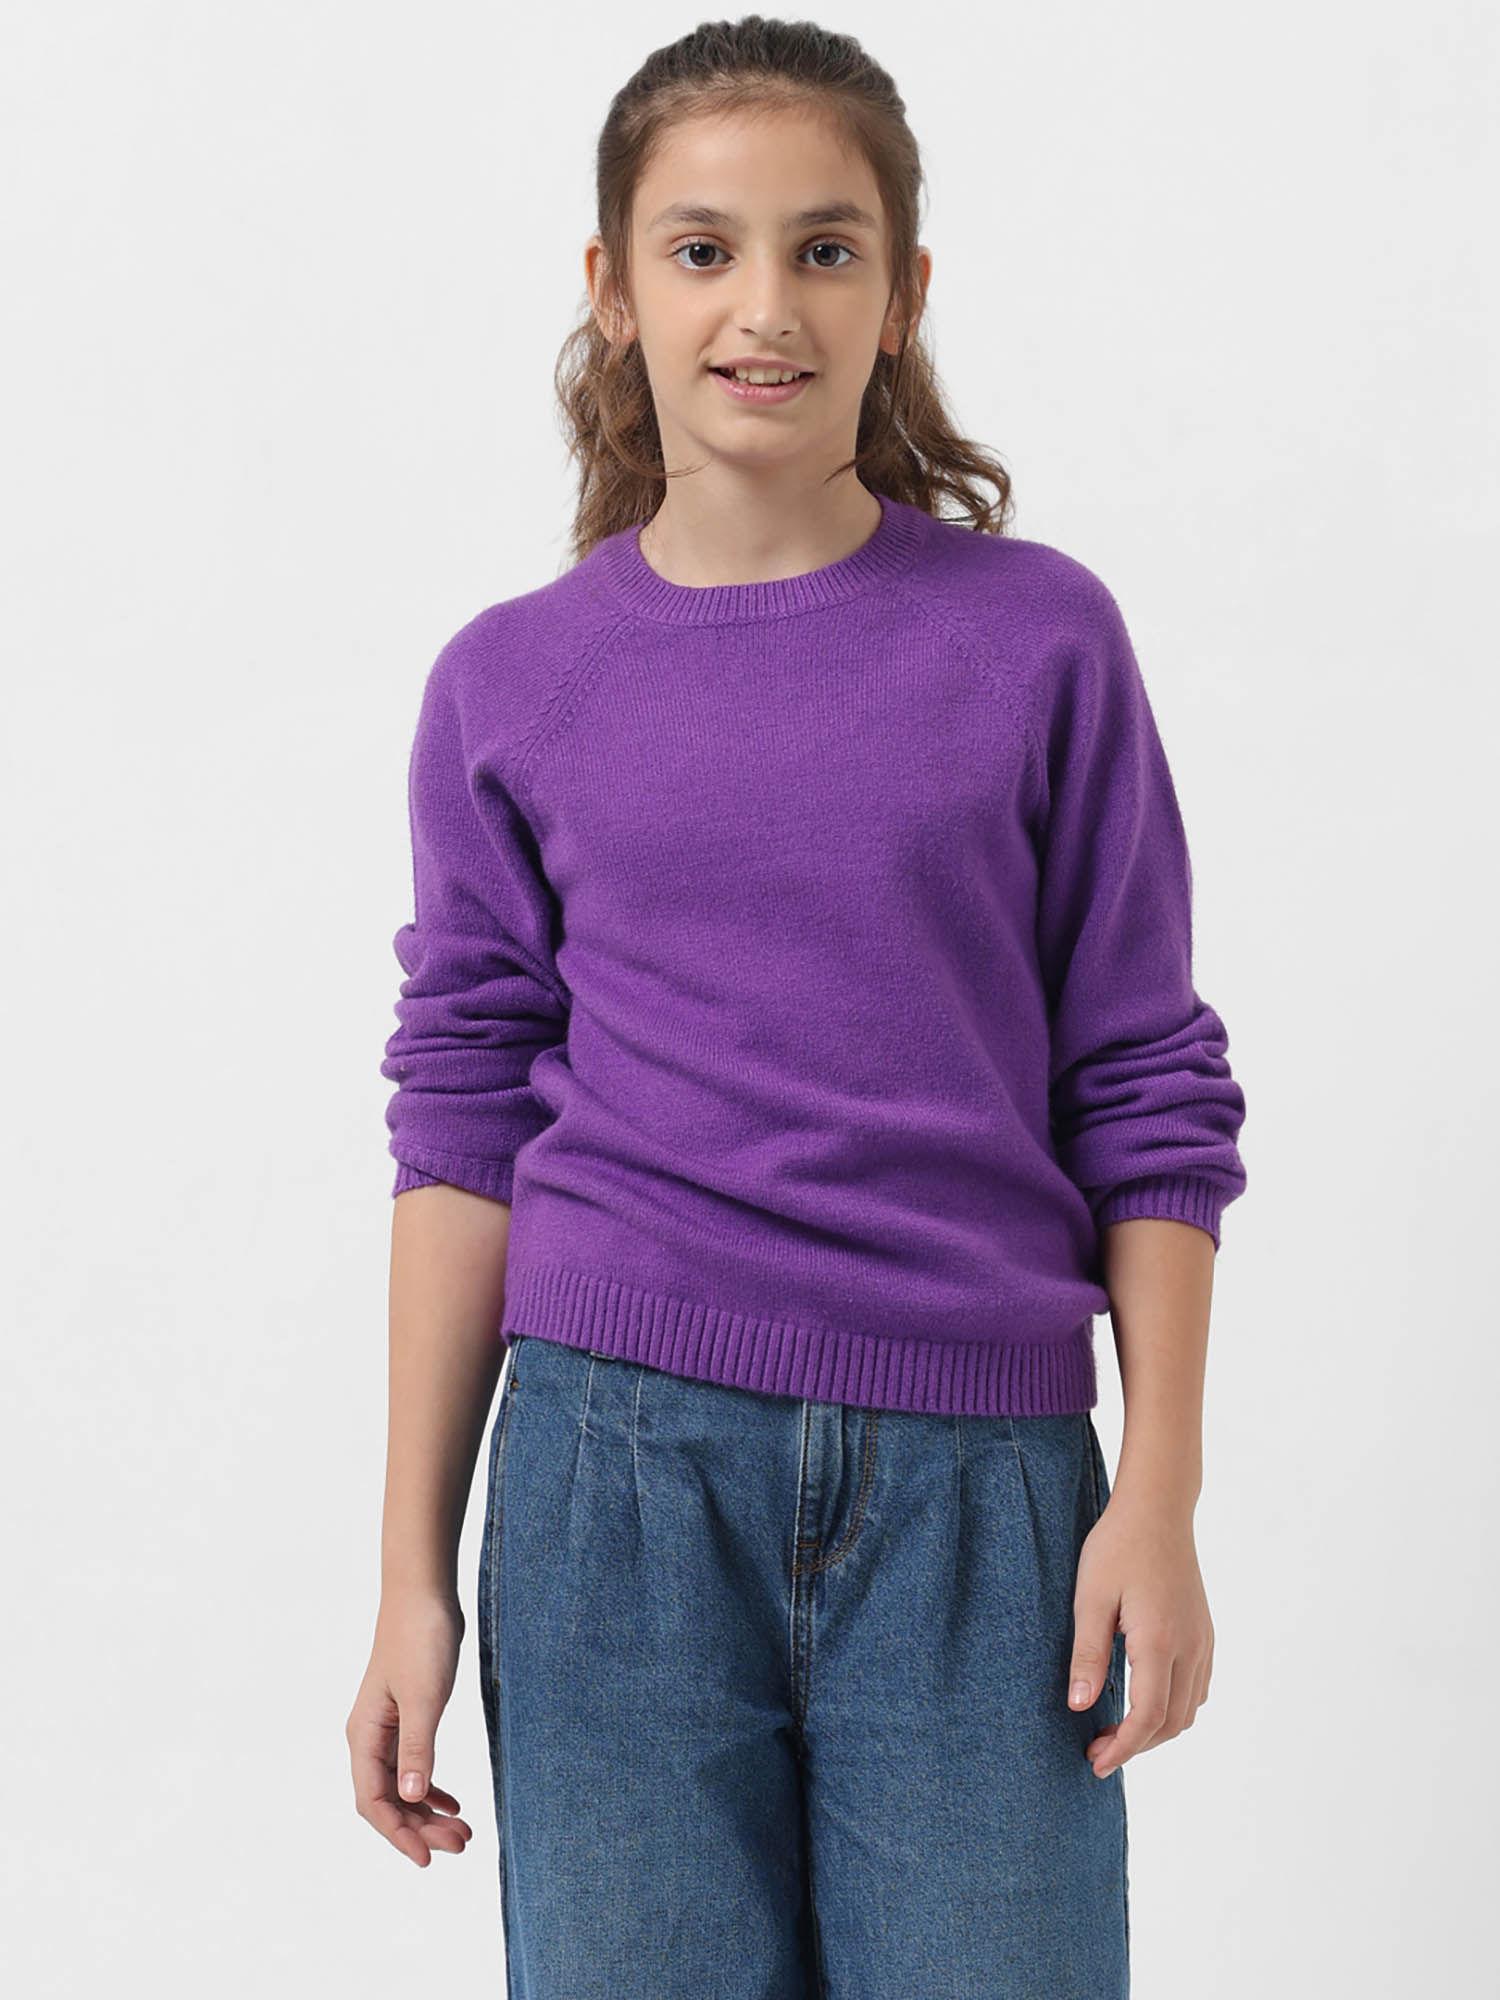 girl-solid-purple-sweater